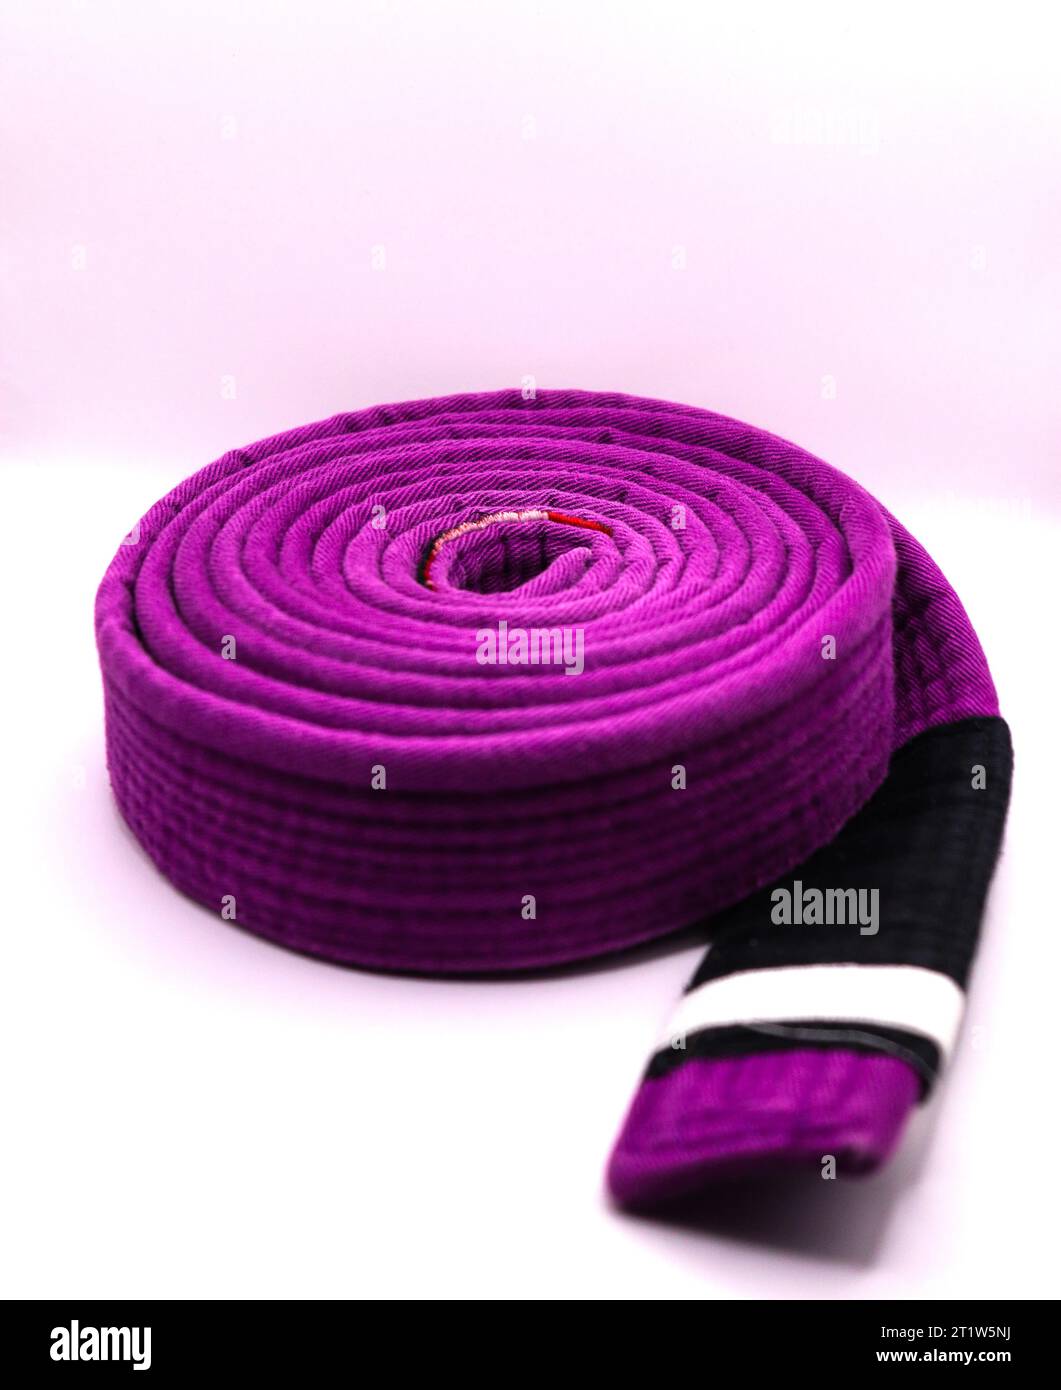 A rolled up brazilian jiu jitsu ranking belt purple with four stripes Stock Photo